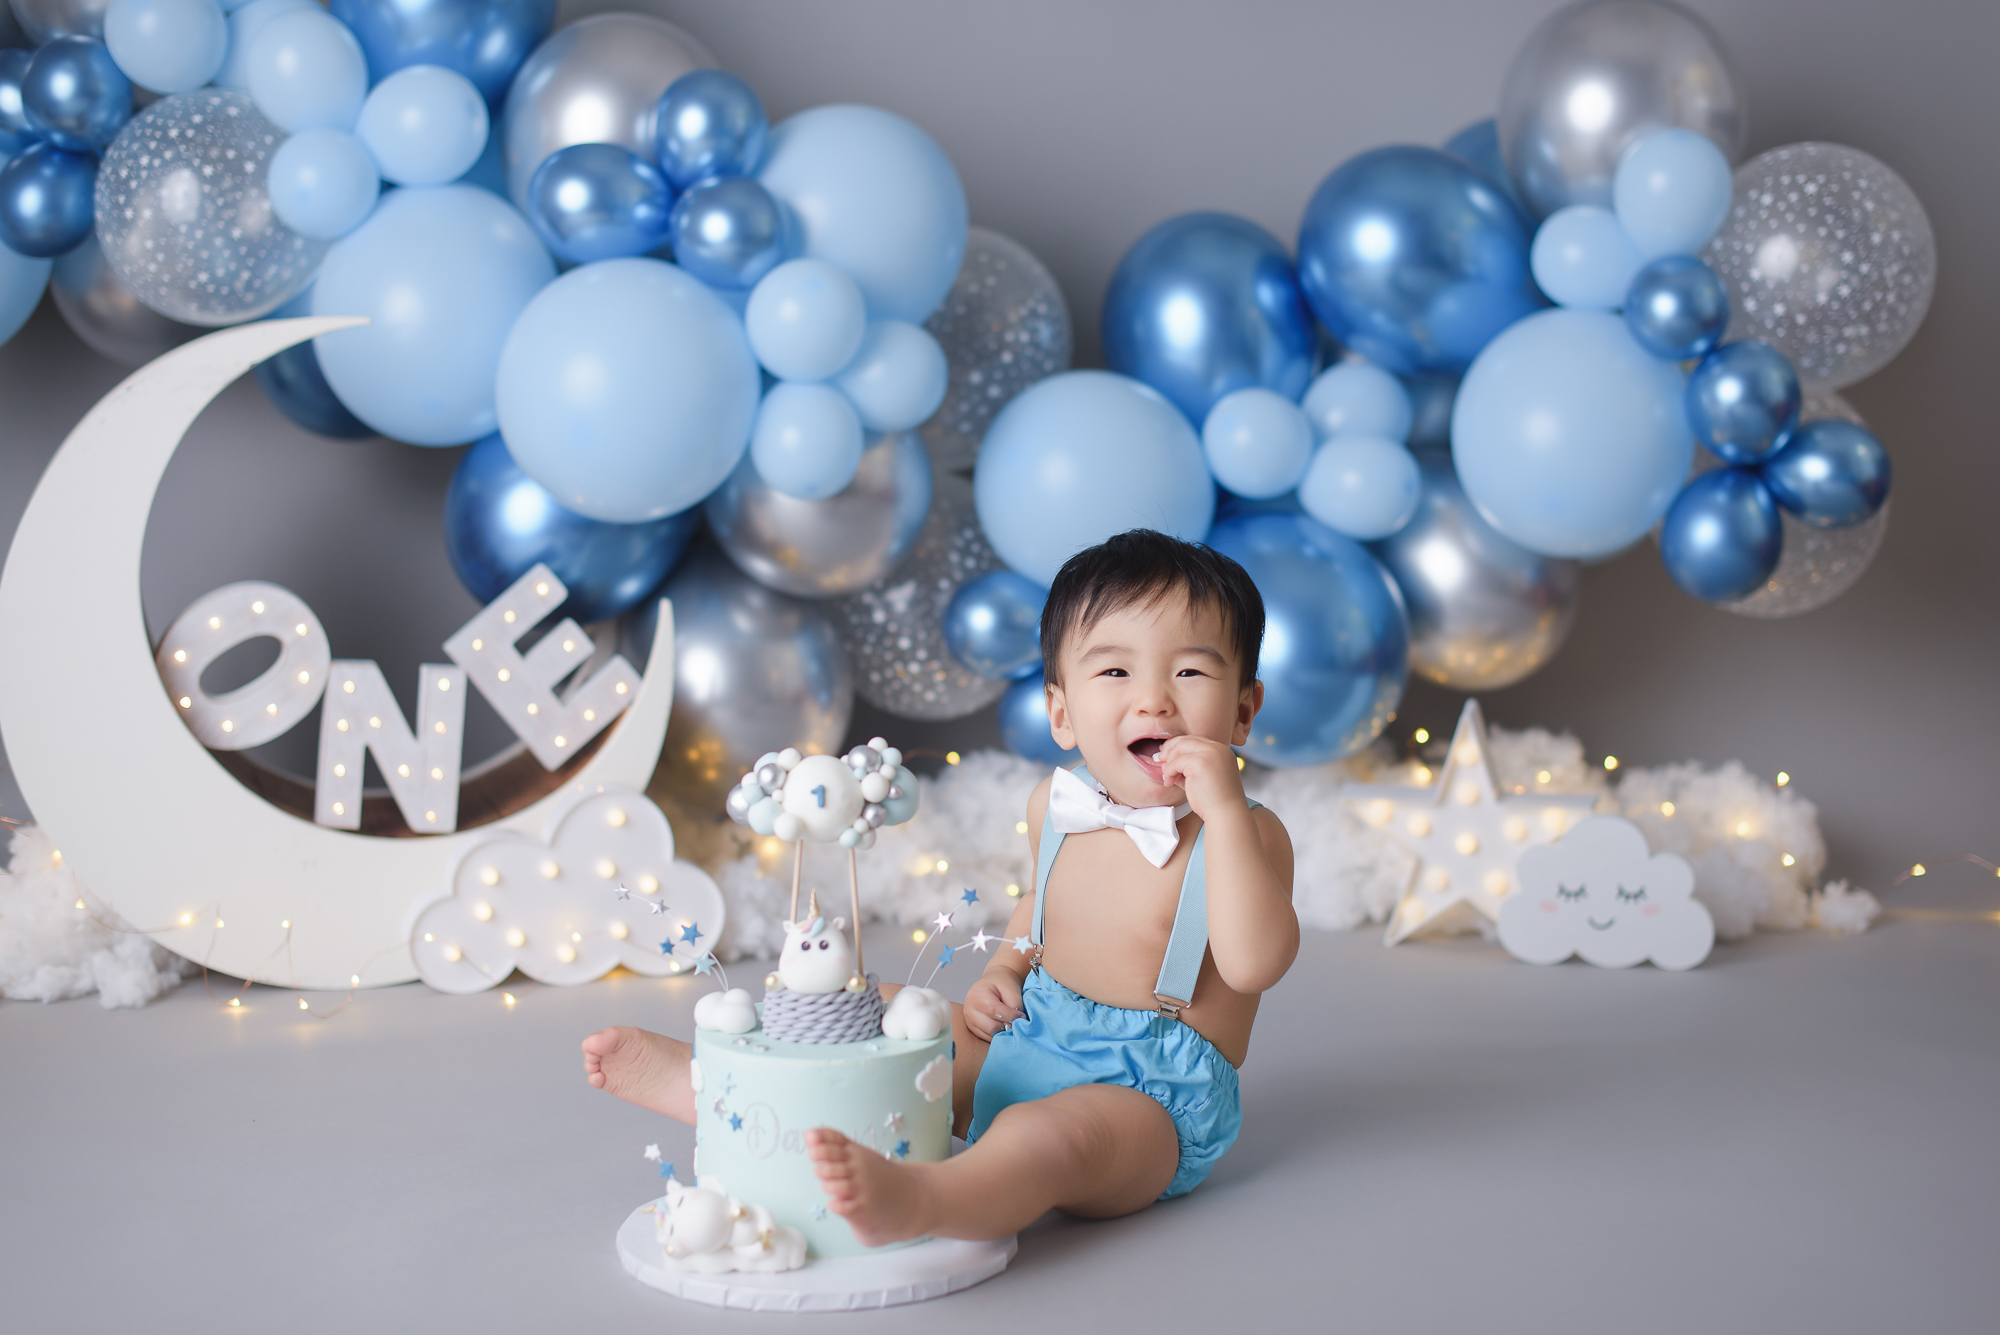 Amanda Dams Photography Cake Smash Photography Calgary Blue Sky Balloon Garland Baby Smiling